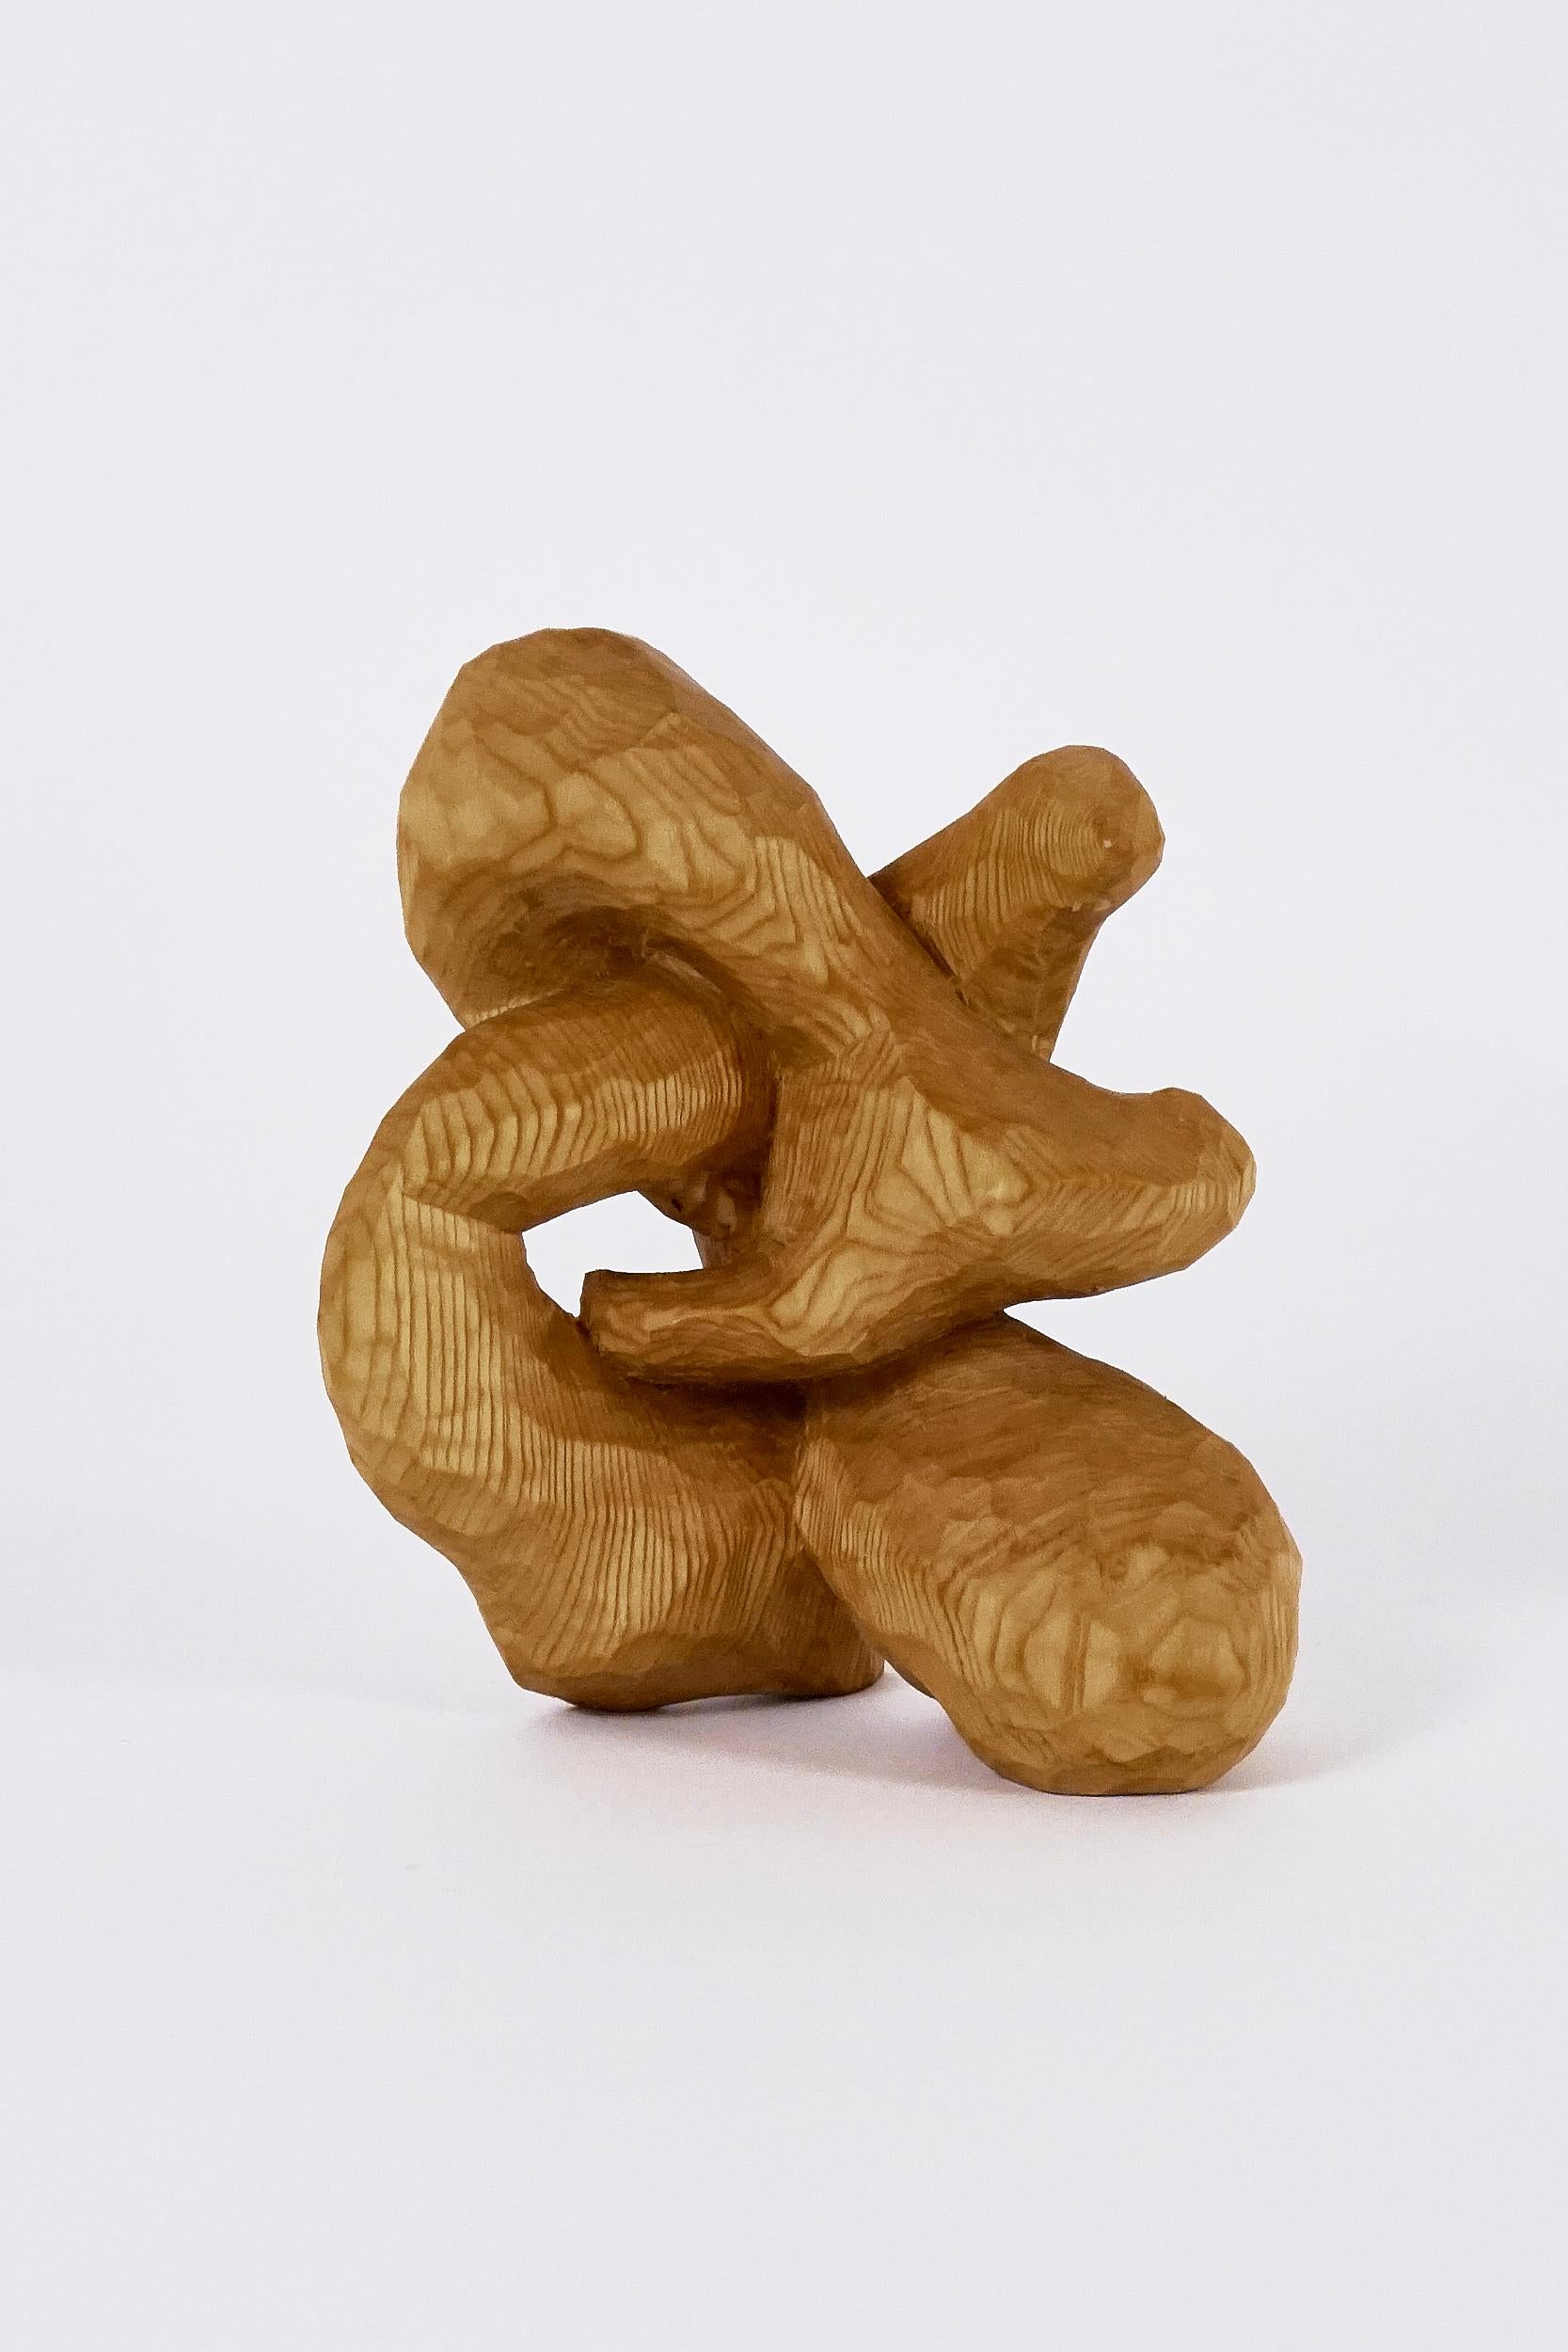 Jared Abner Abstract Sculpture - Carved Investigation Eleven, Carved wood sculpture